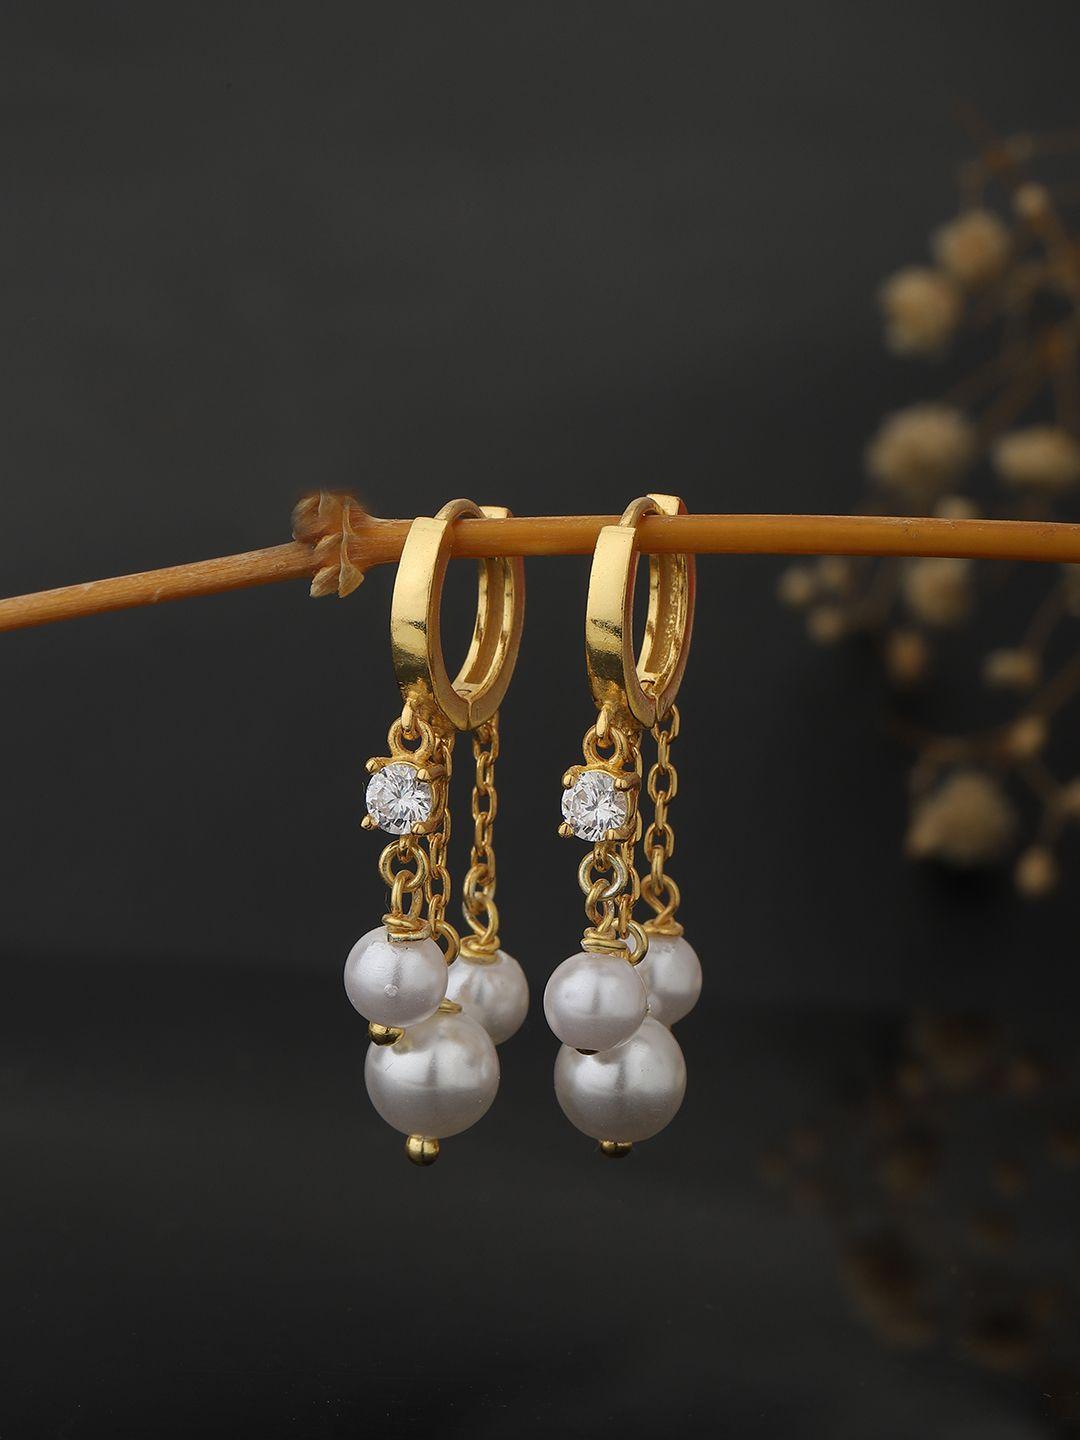 carlton-london-gold-toned-&-white-circular-hoop-earrings